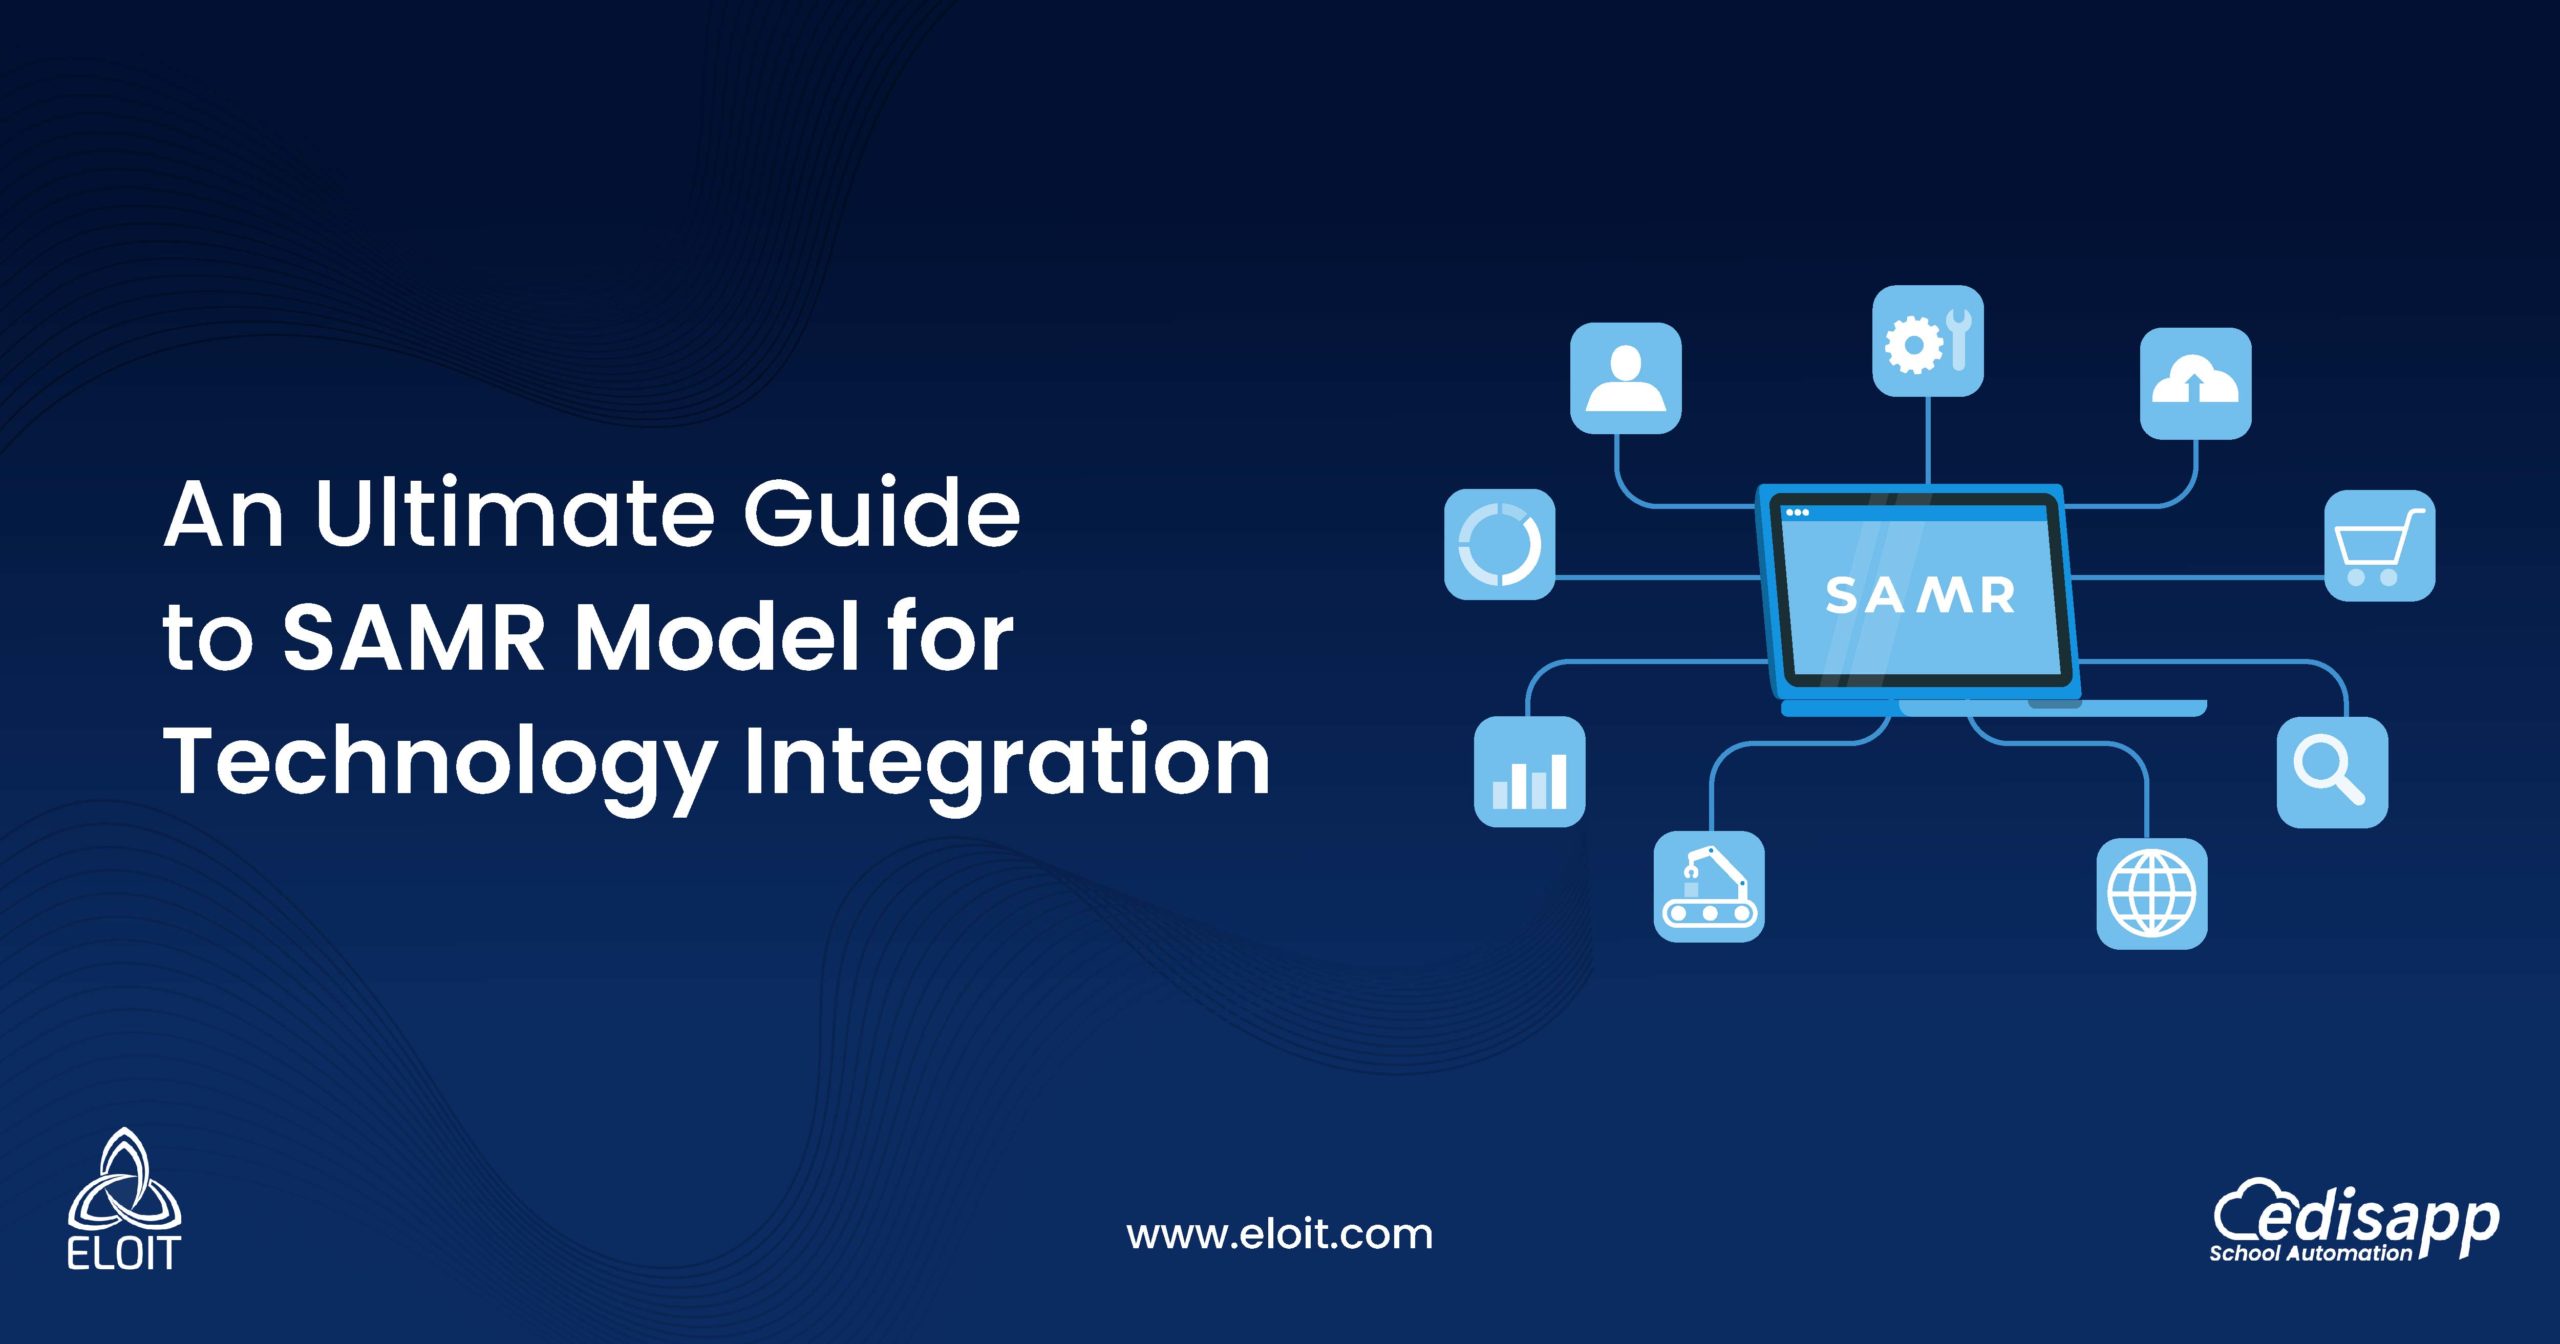 An Ultimate Guide to SAMR Model for Technology Integration